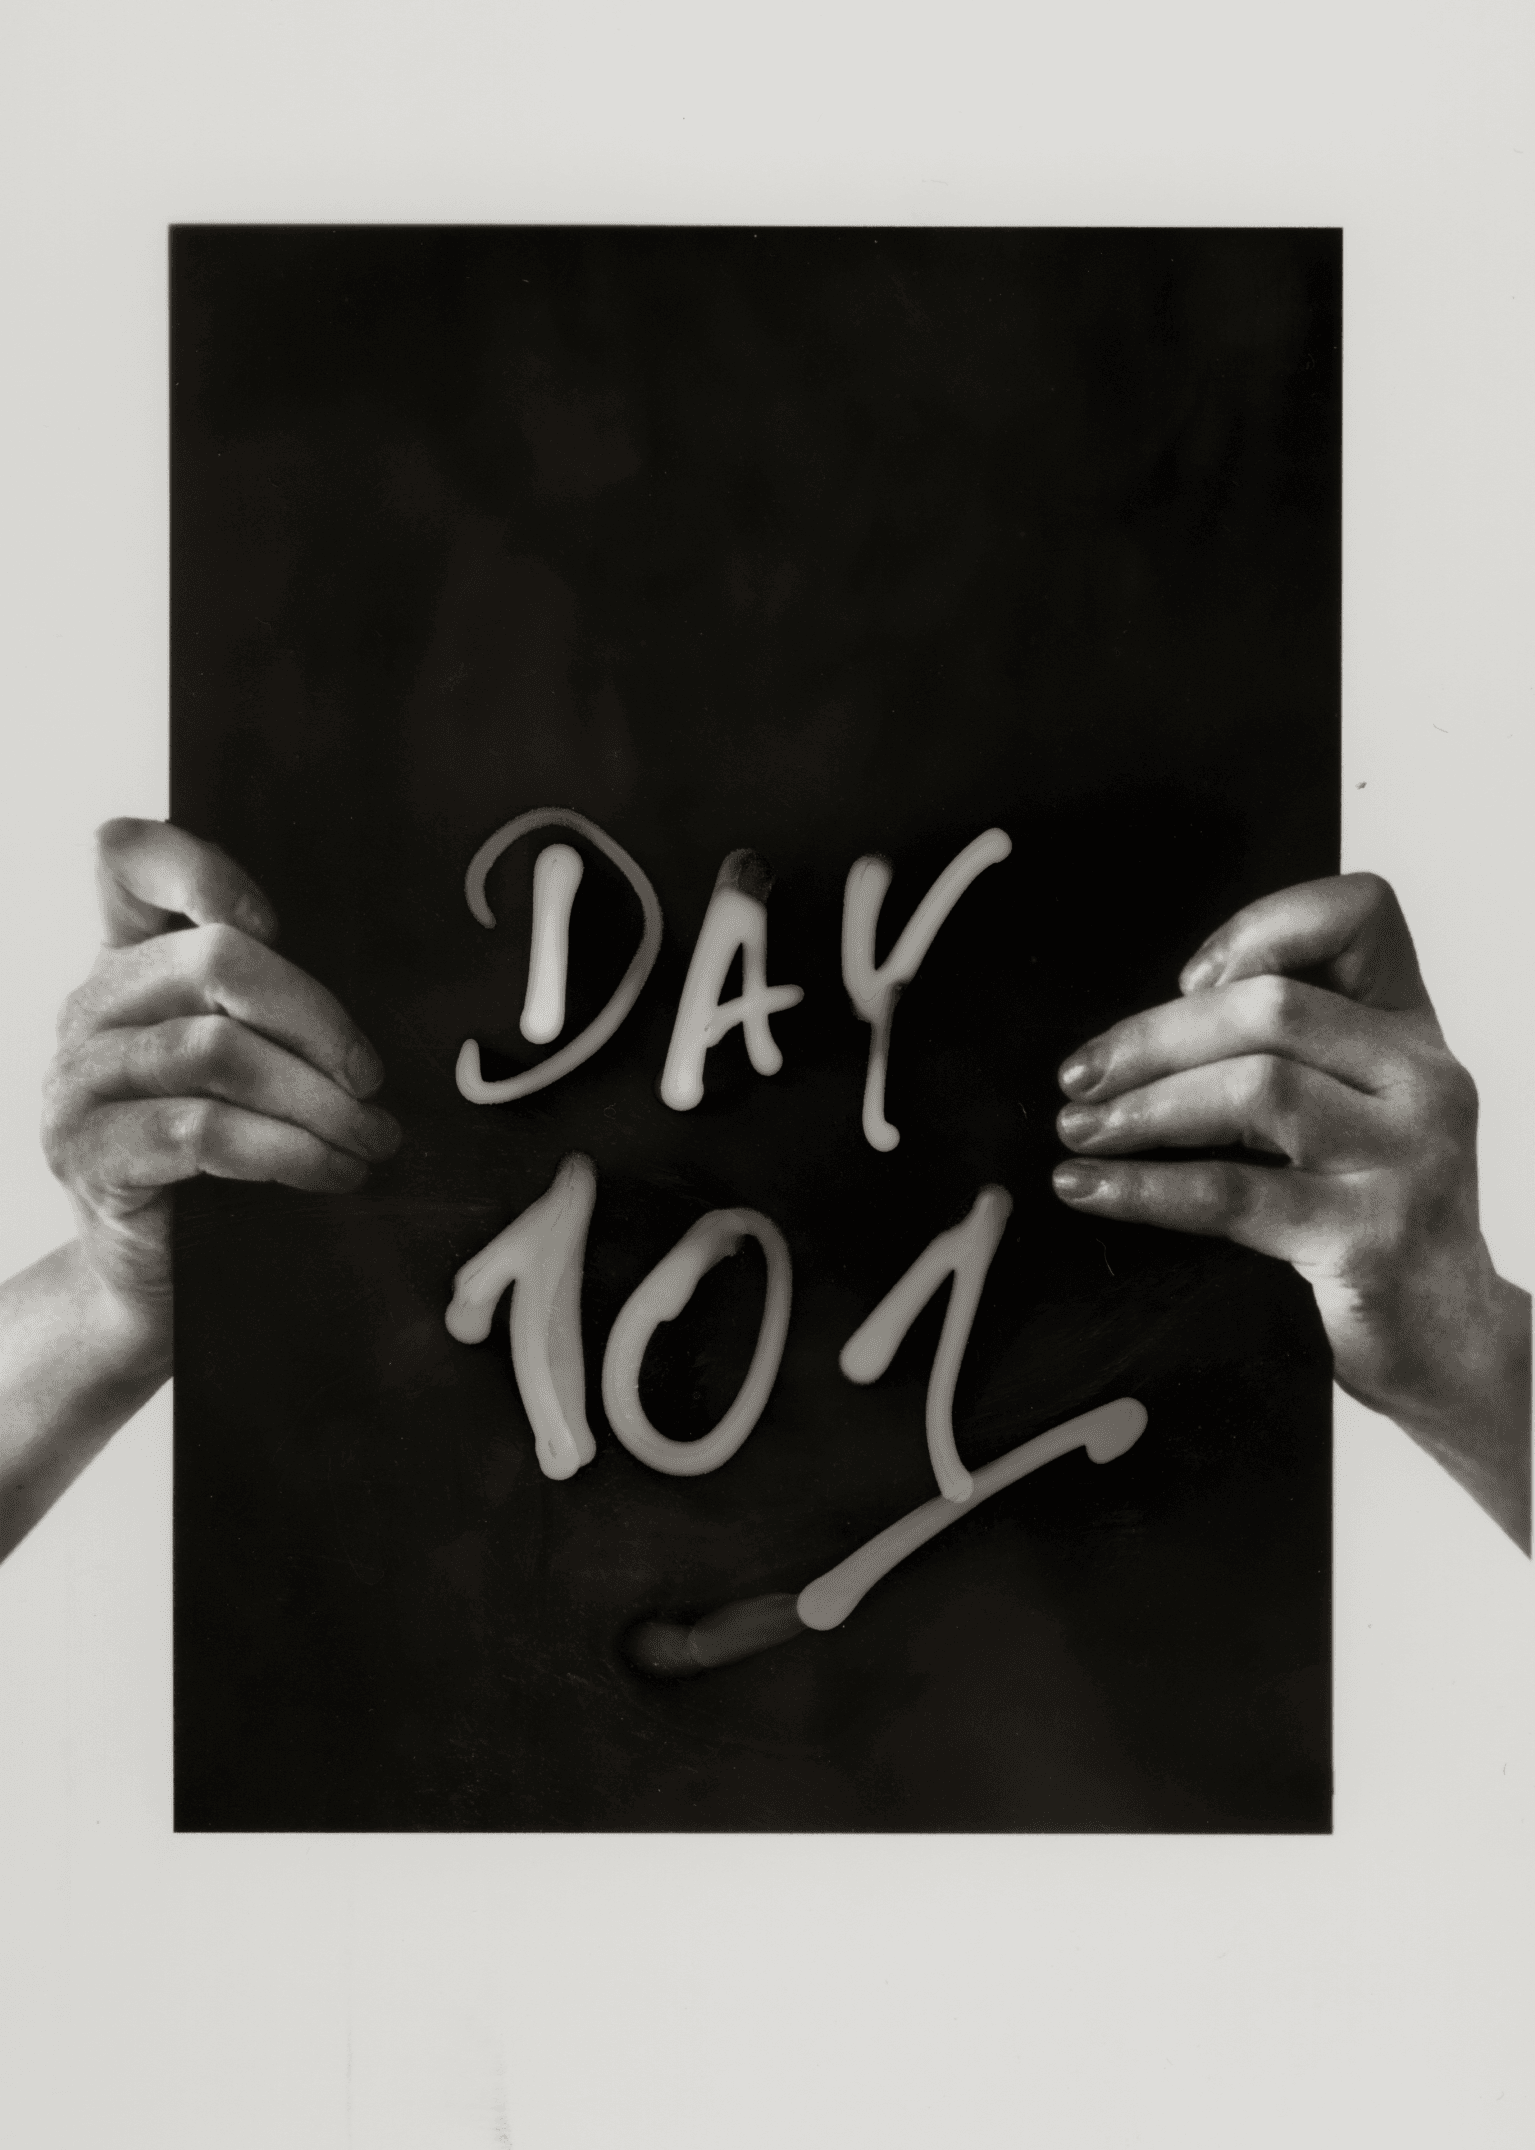 Day 101 - Saturday, 06/04/2022